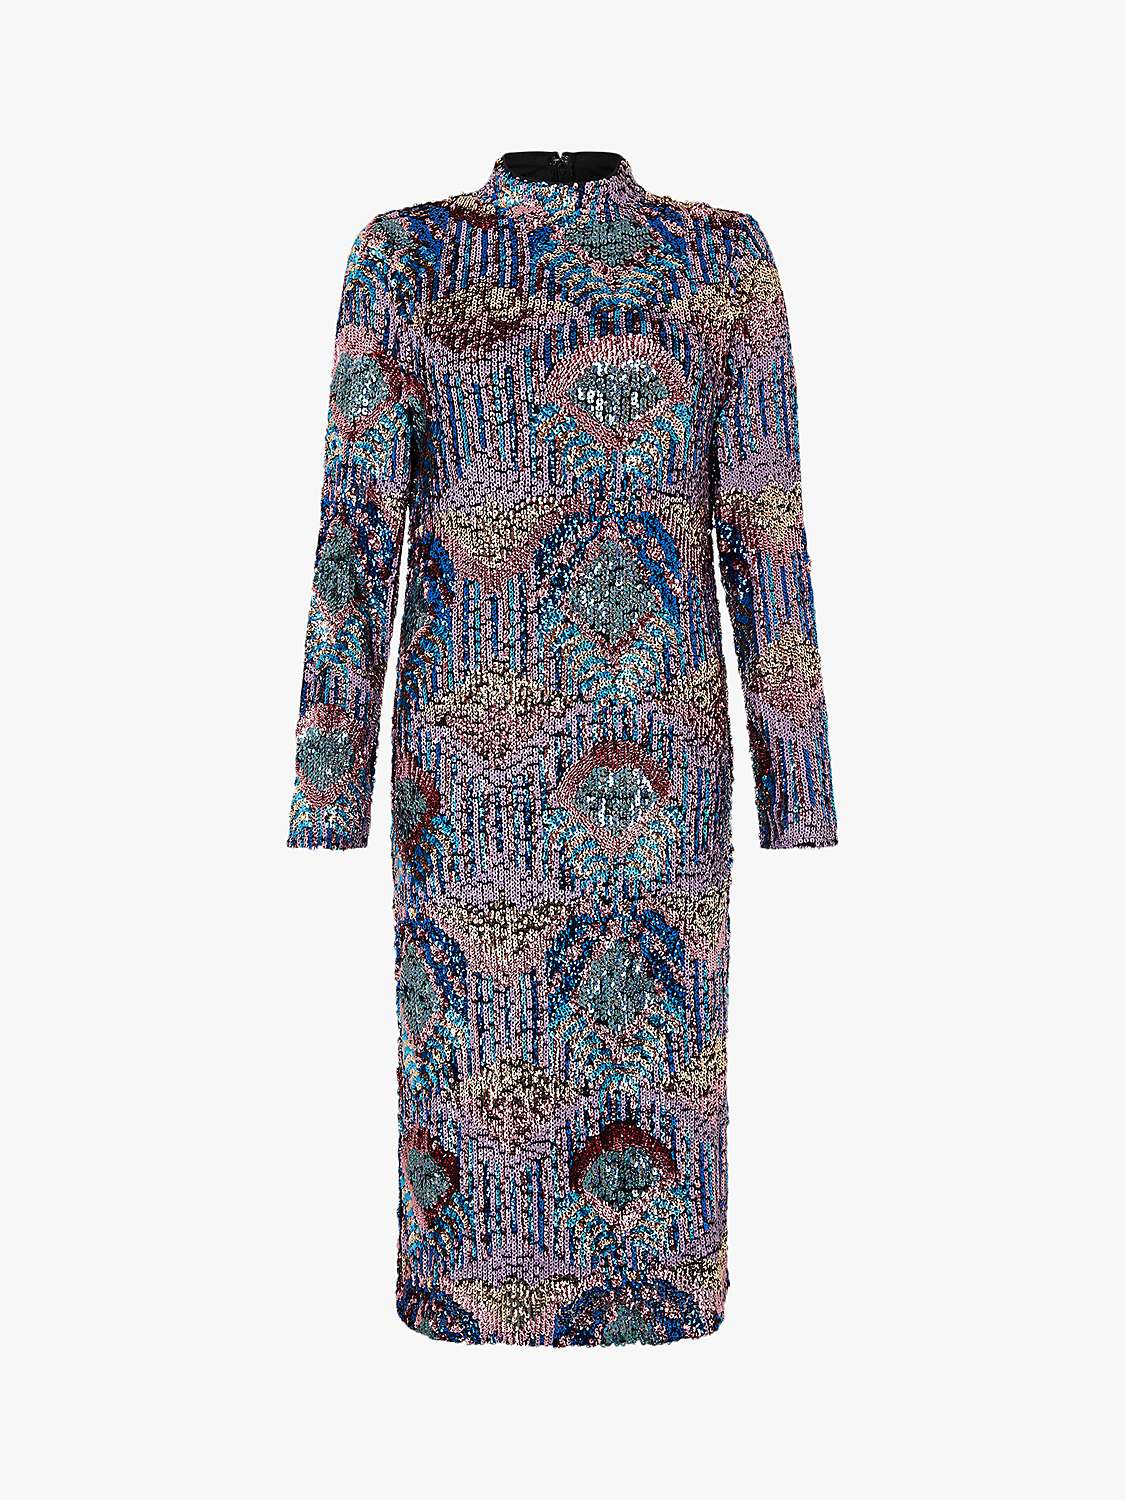 Monsoon Zoey Sequin Embellished Dress, Blue/Multi at John Lewis & Partners